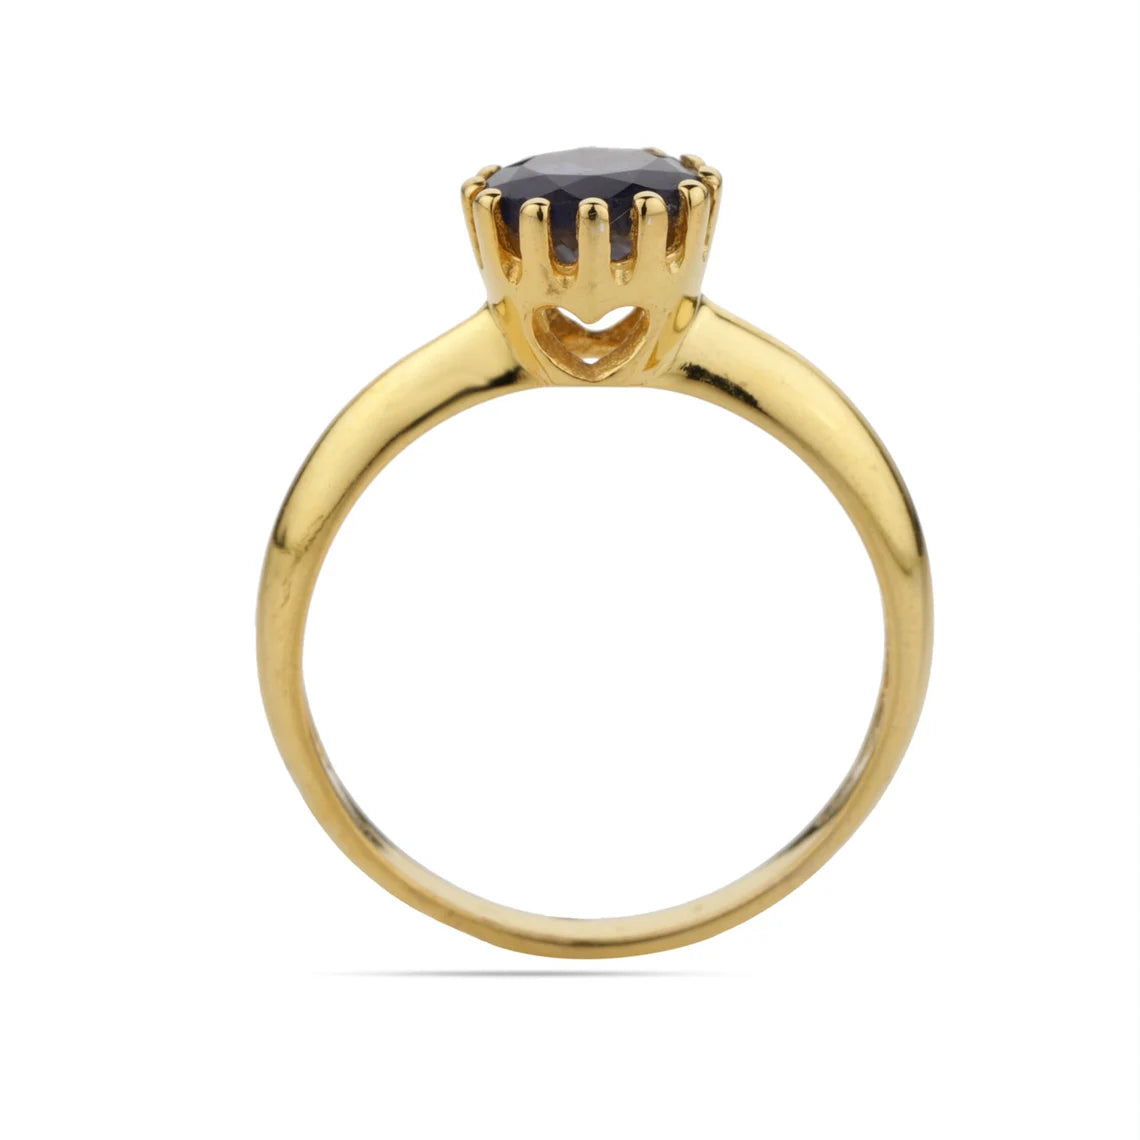 Round Citrine Ring, November Birthstone Ring, Citrine Gold Ring, Stacking Ring, Round Gemstone Ring, Natural Citrine Sterling Silver Ring